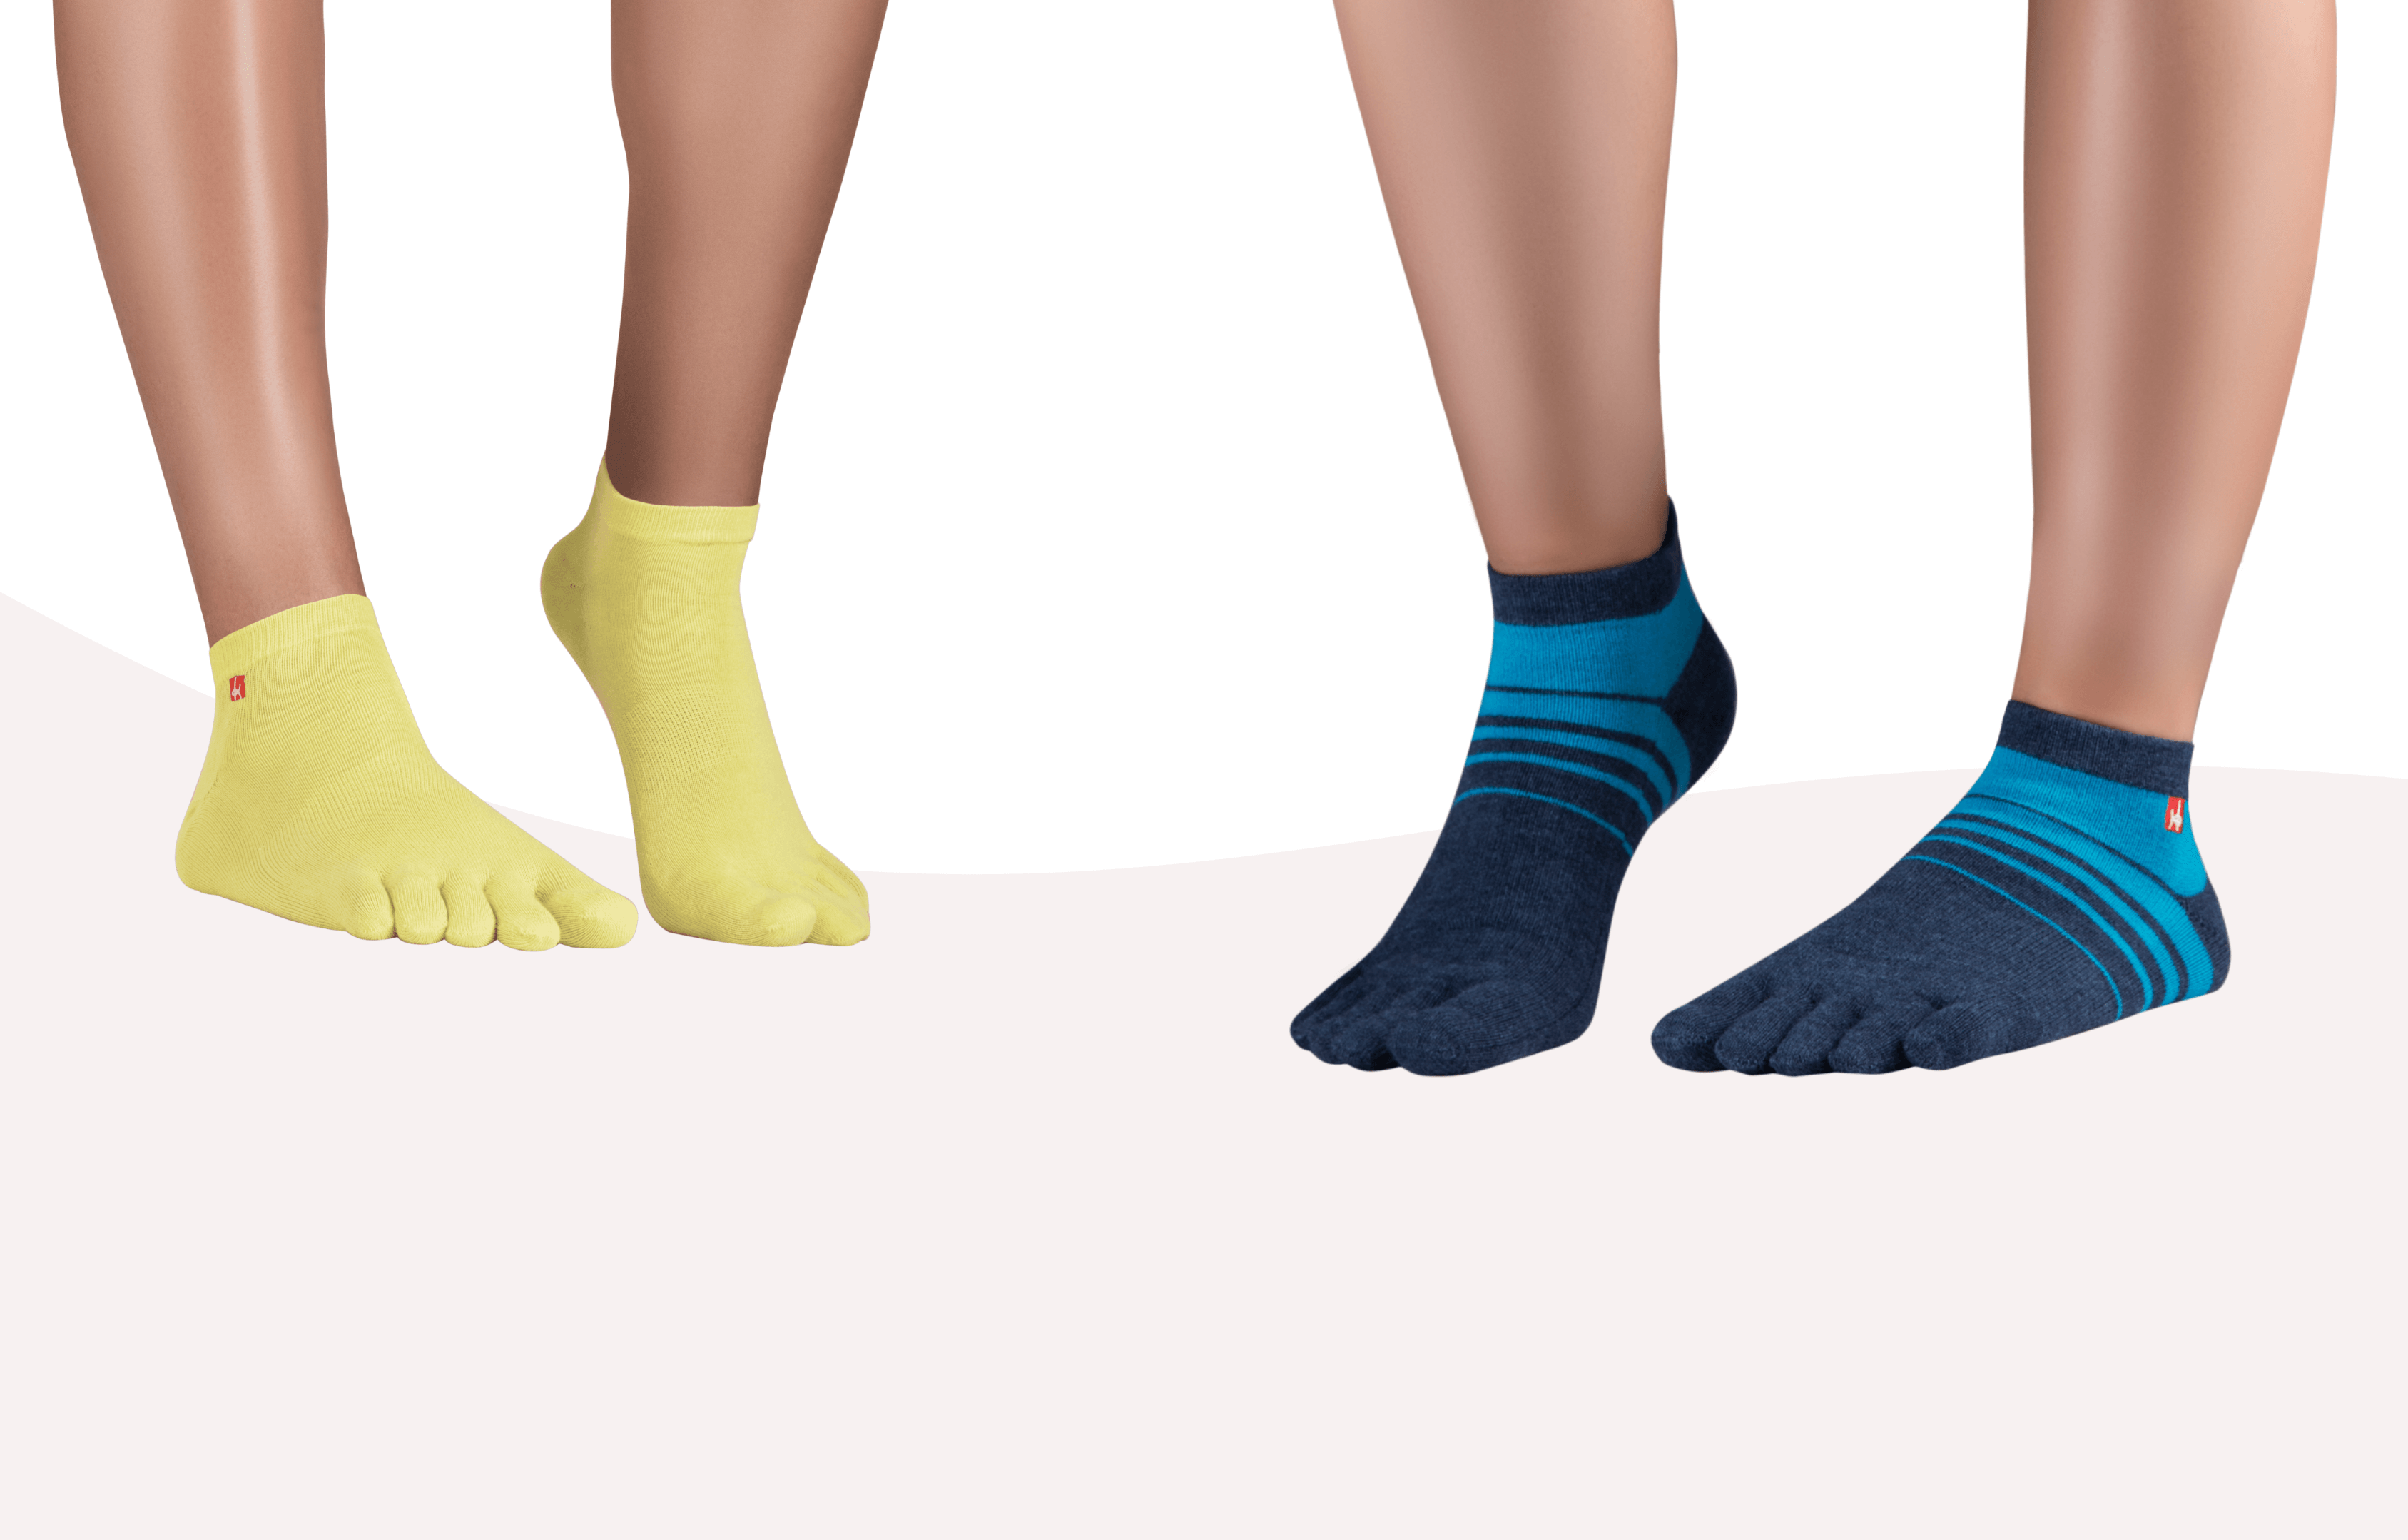 The Toe Socks. Knitido® Toe Socks